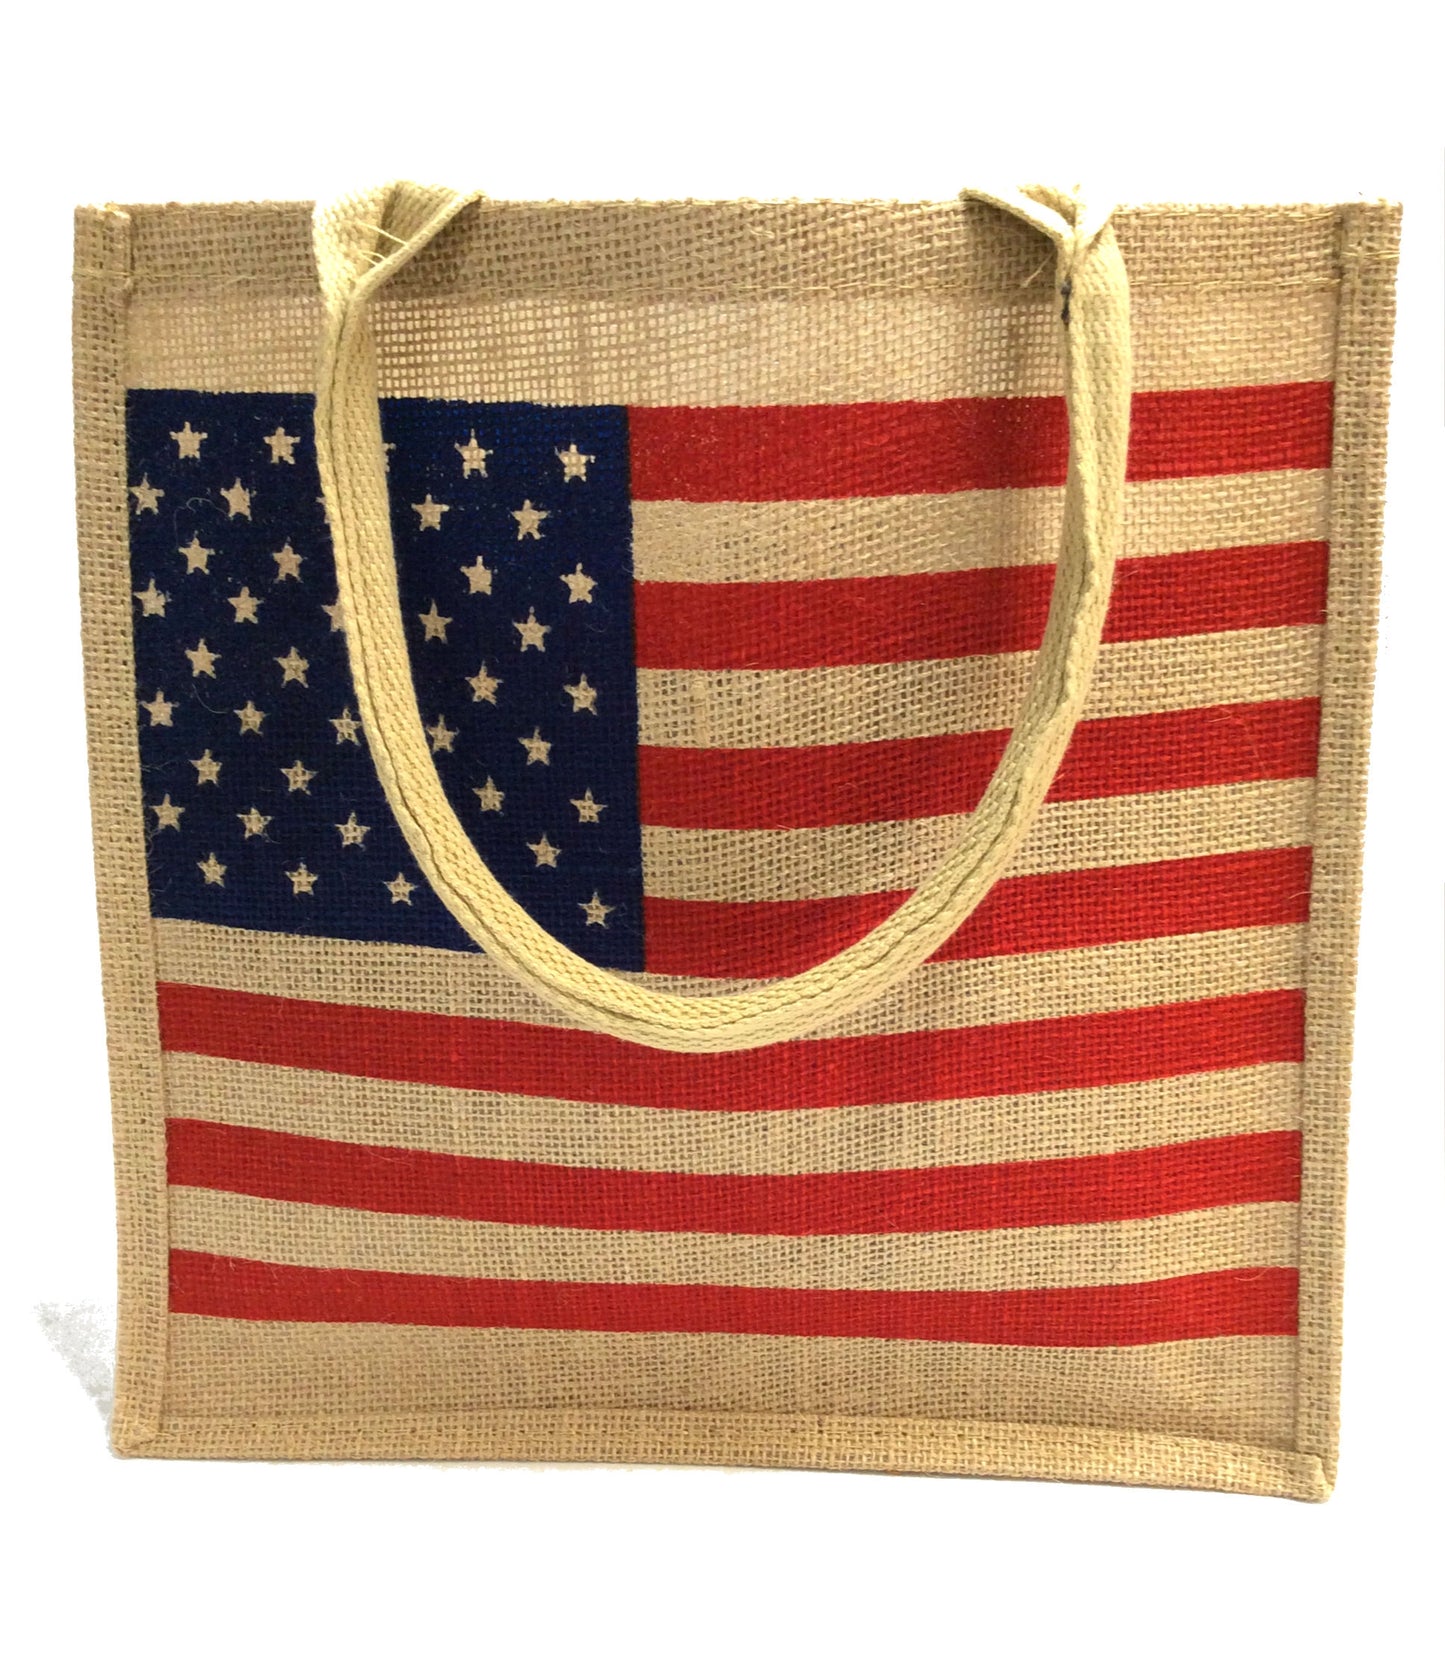 American Flag Bag #86-3025